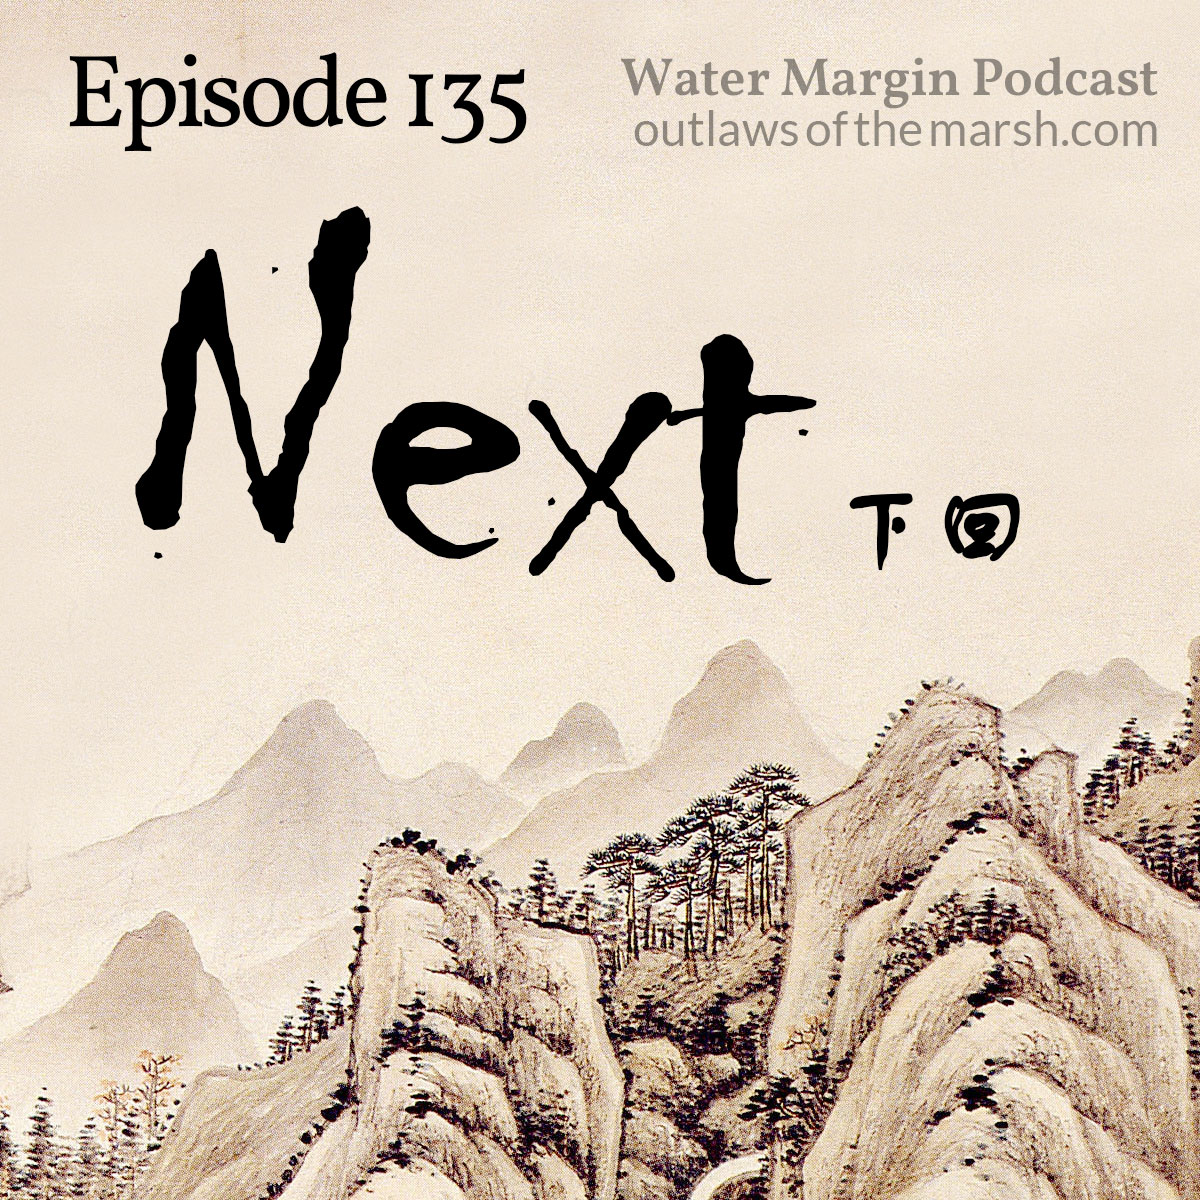 Water Margin Podcast: Episode 135